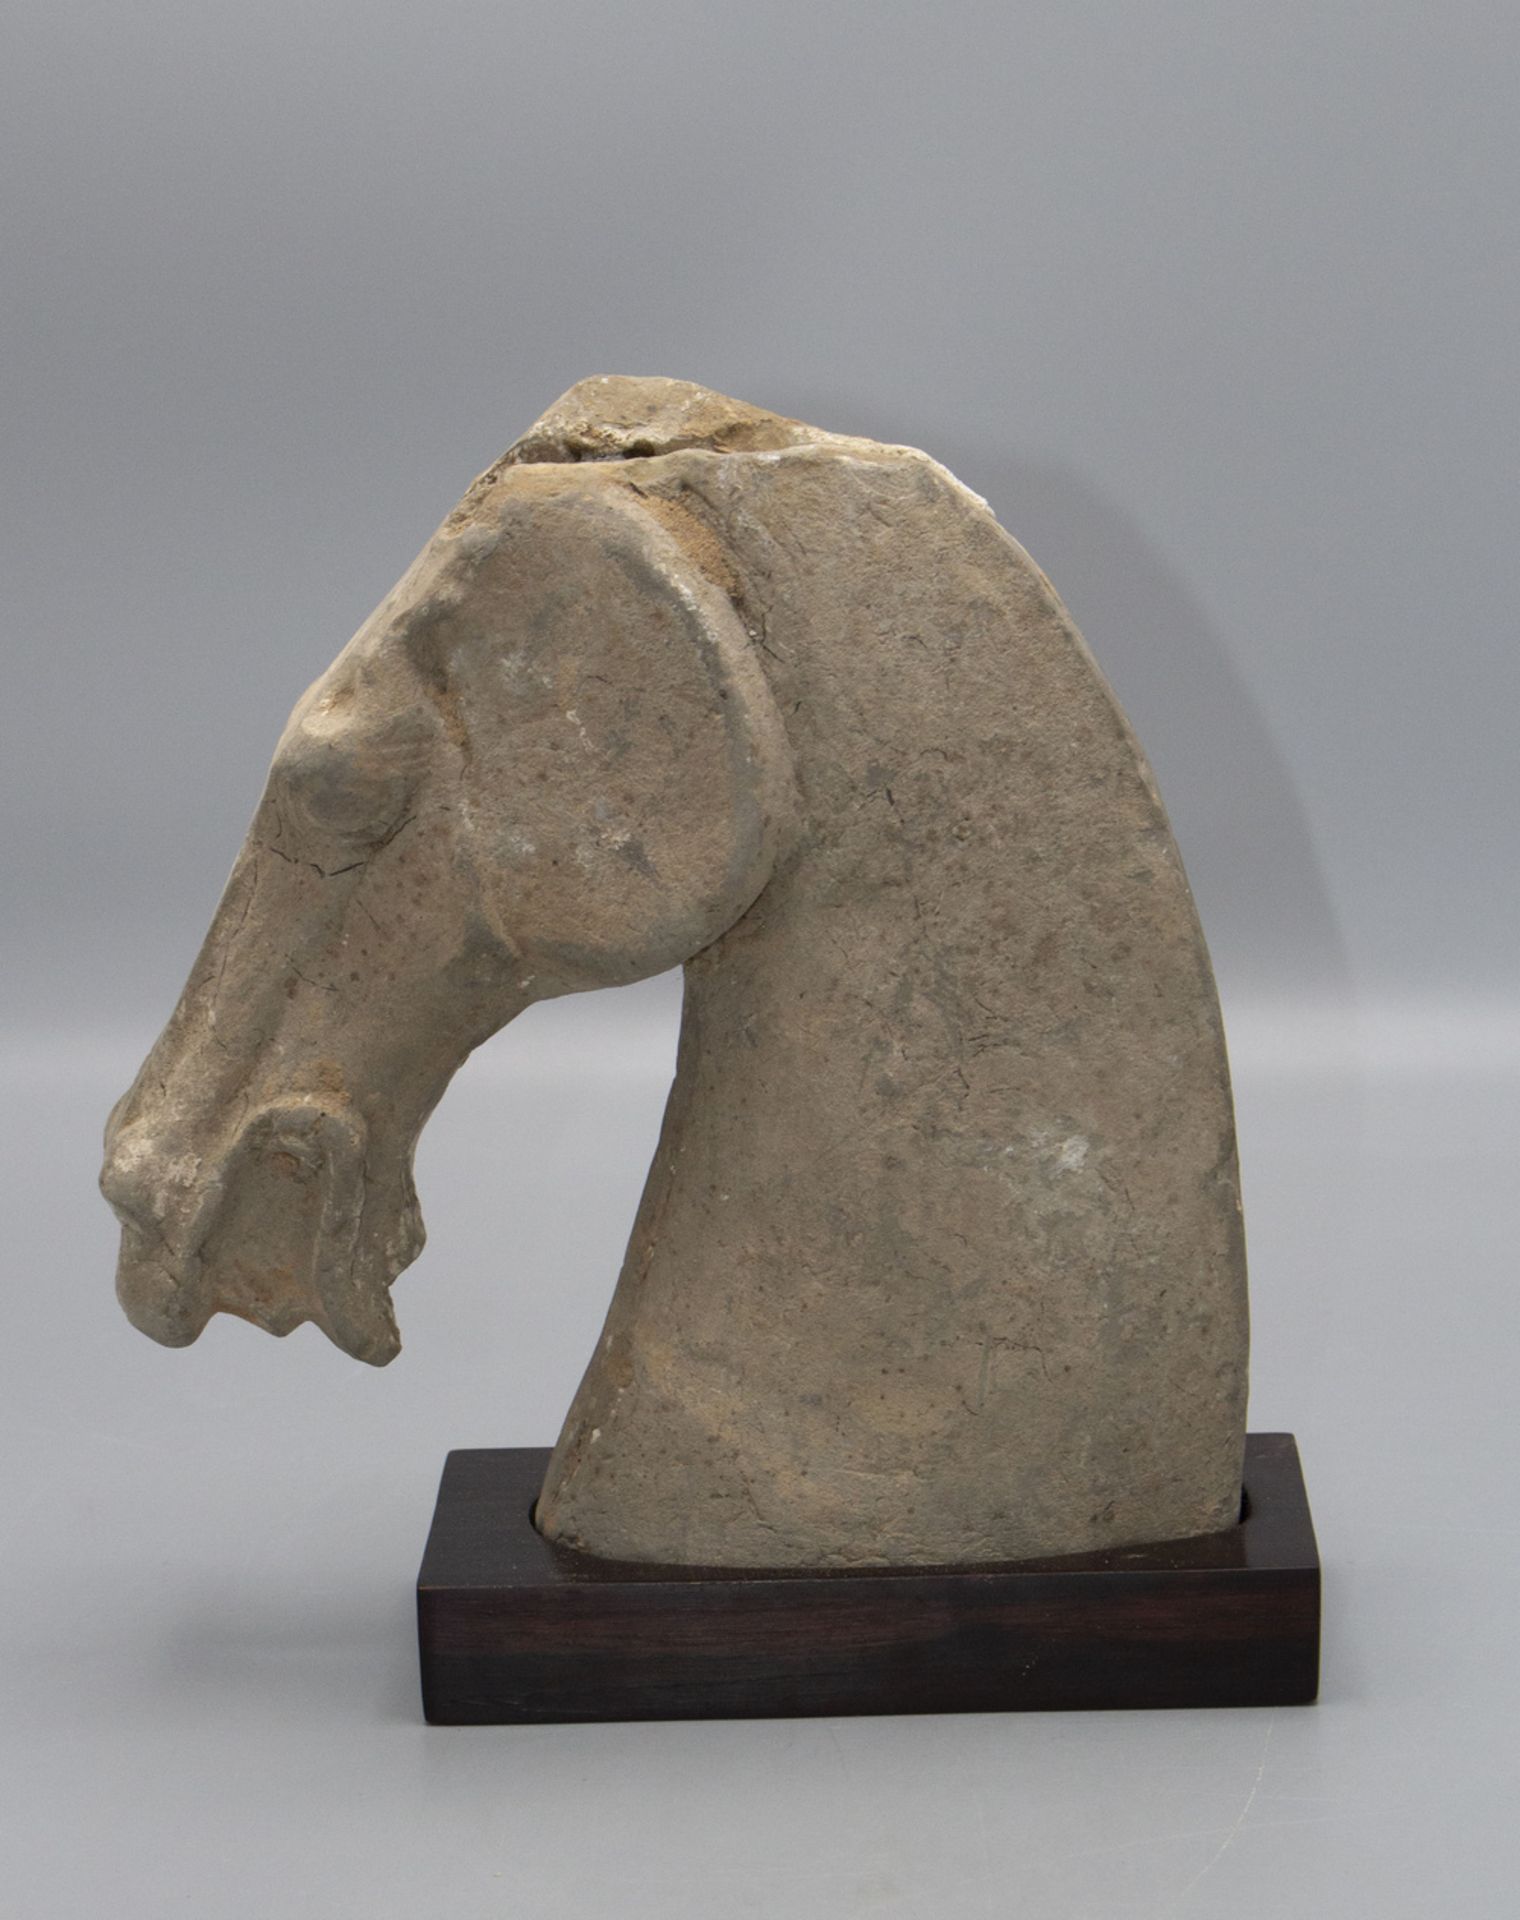 Pferdekopf / A horse head, wohl altes China, wohl Han-Dynastie, 206 v. Chr.-220 n. Chr.